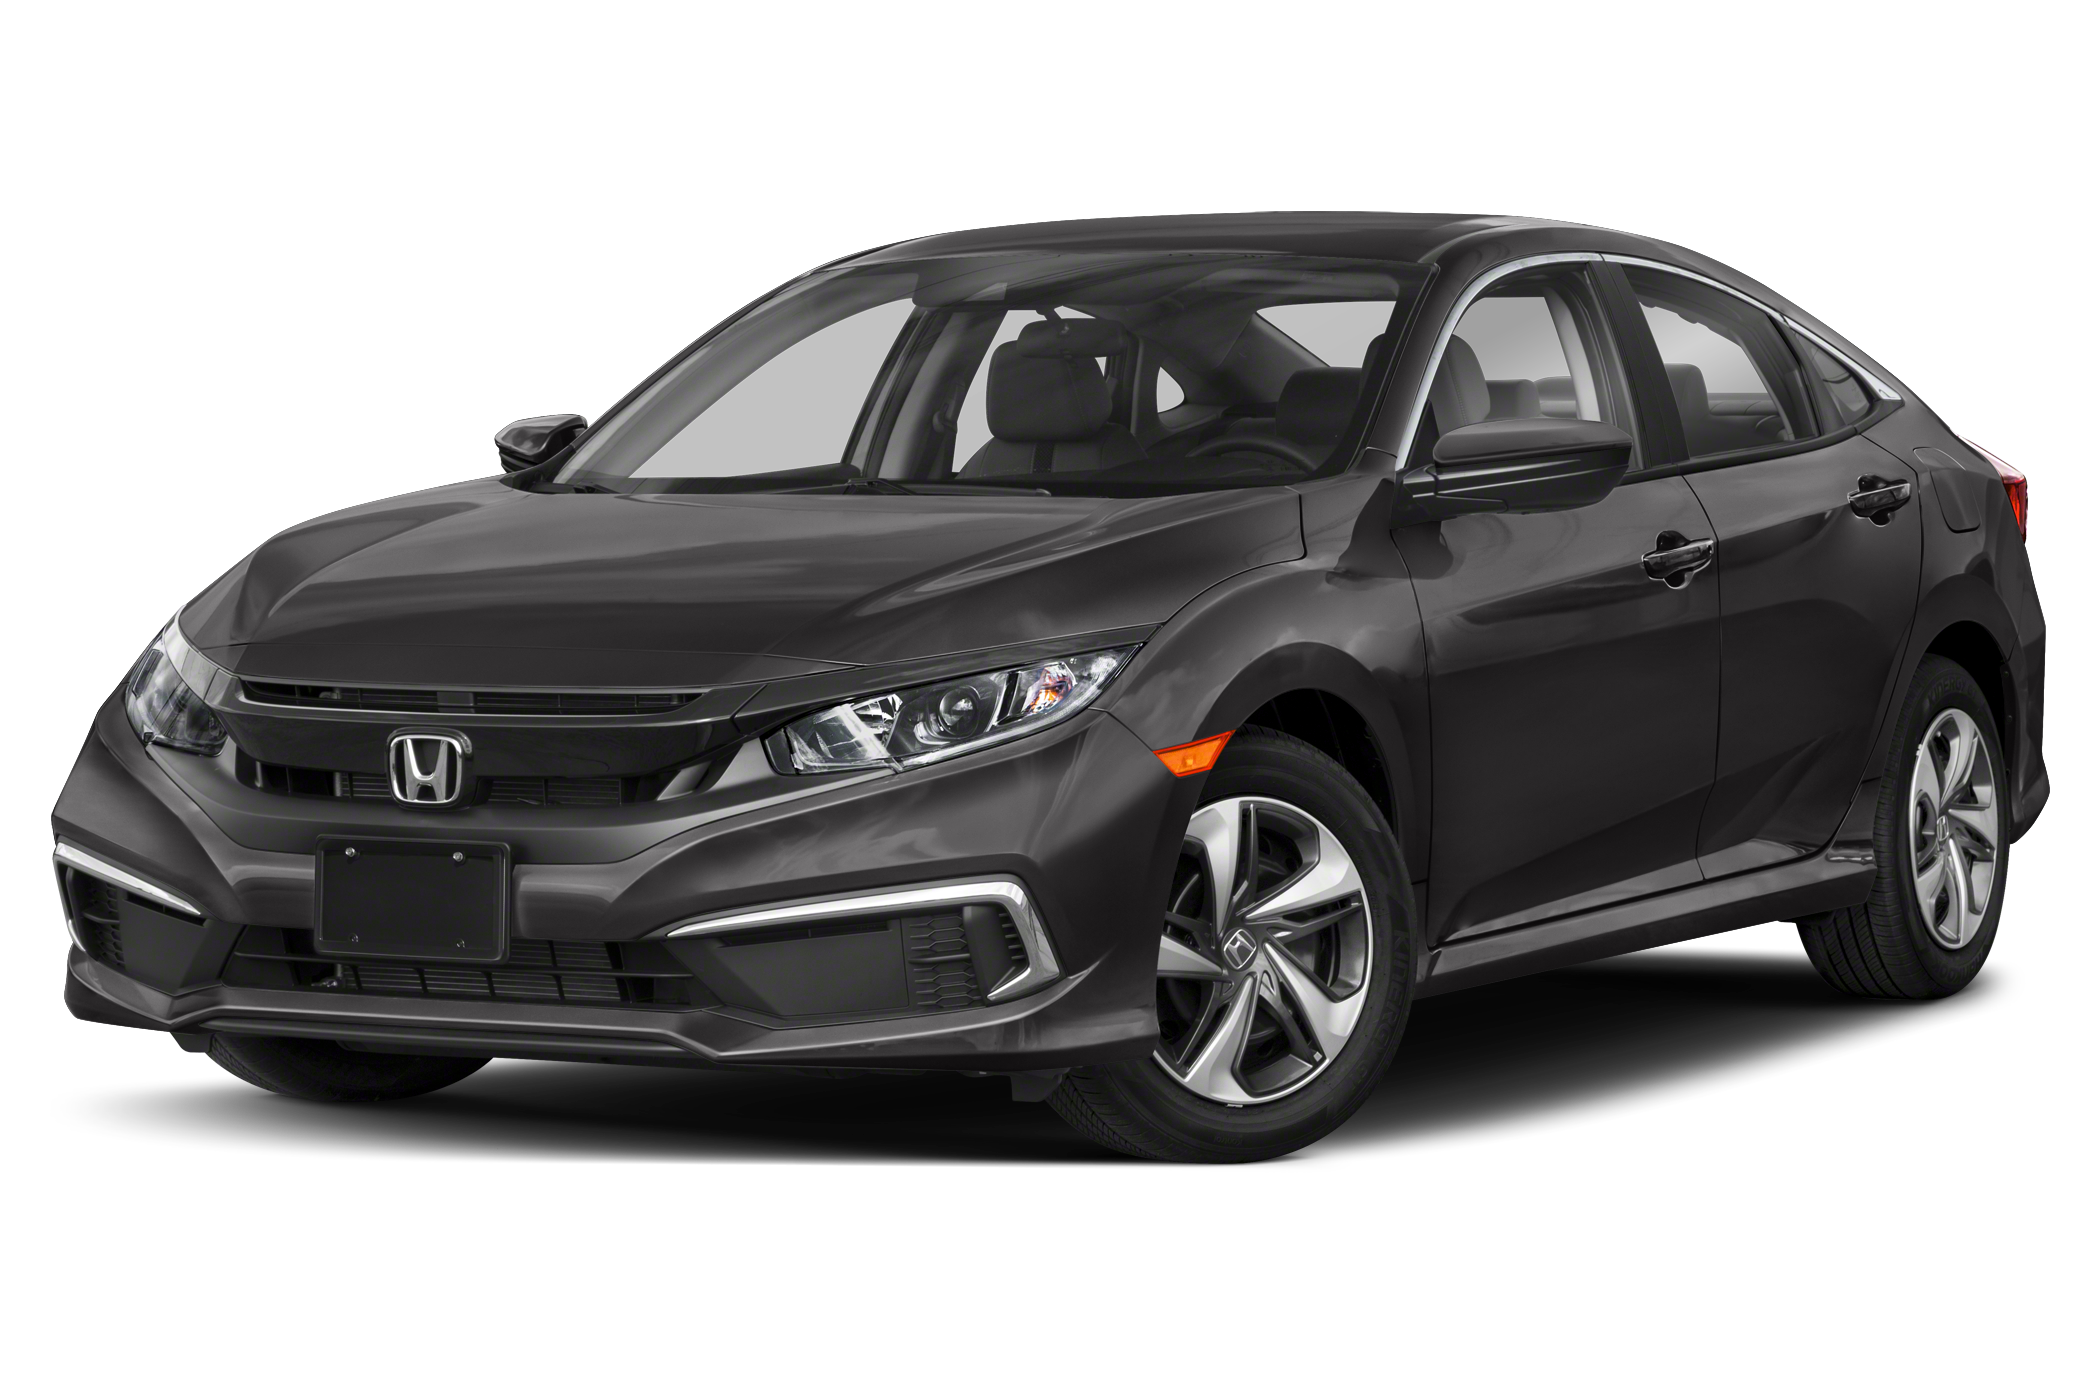 2021 Honda Civic - View Specs, Prices & Photos - WHEELS.ca